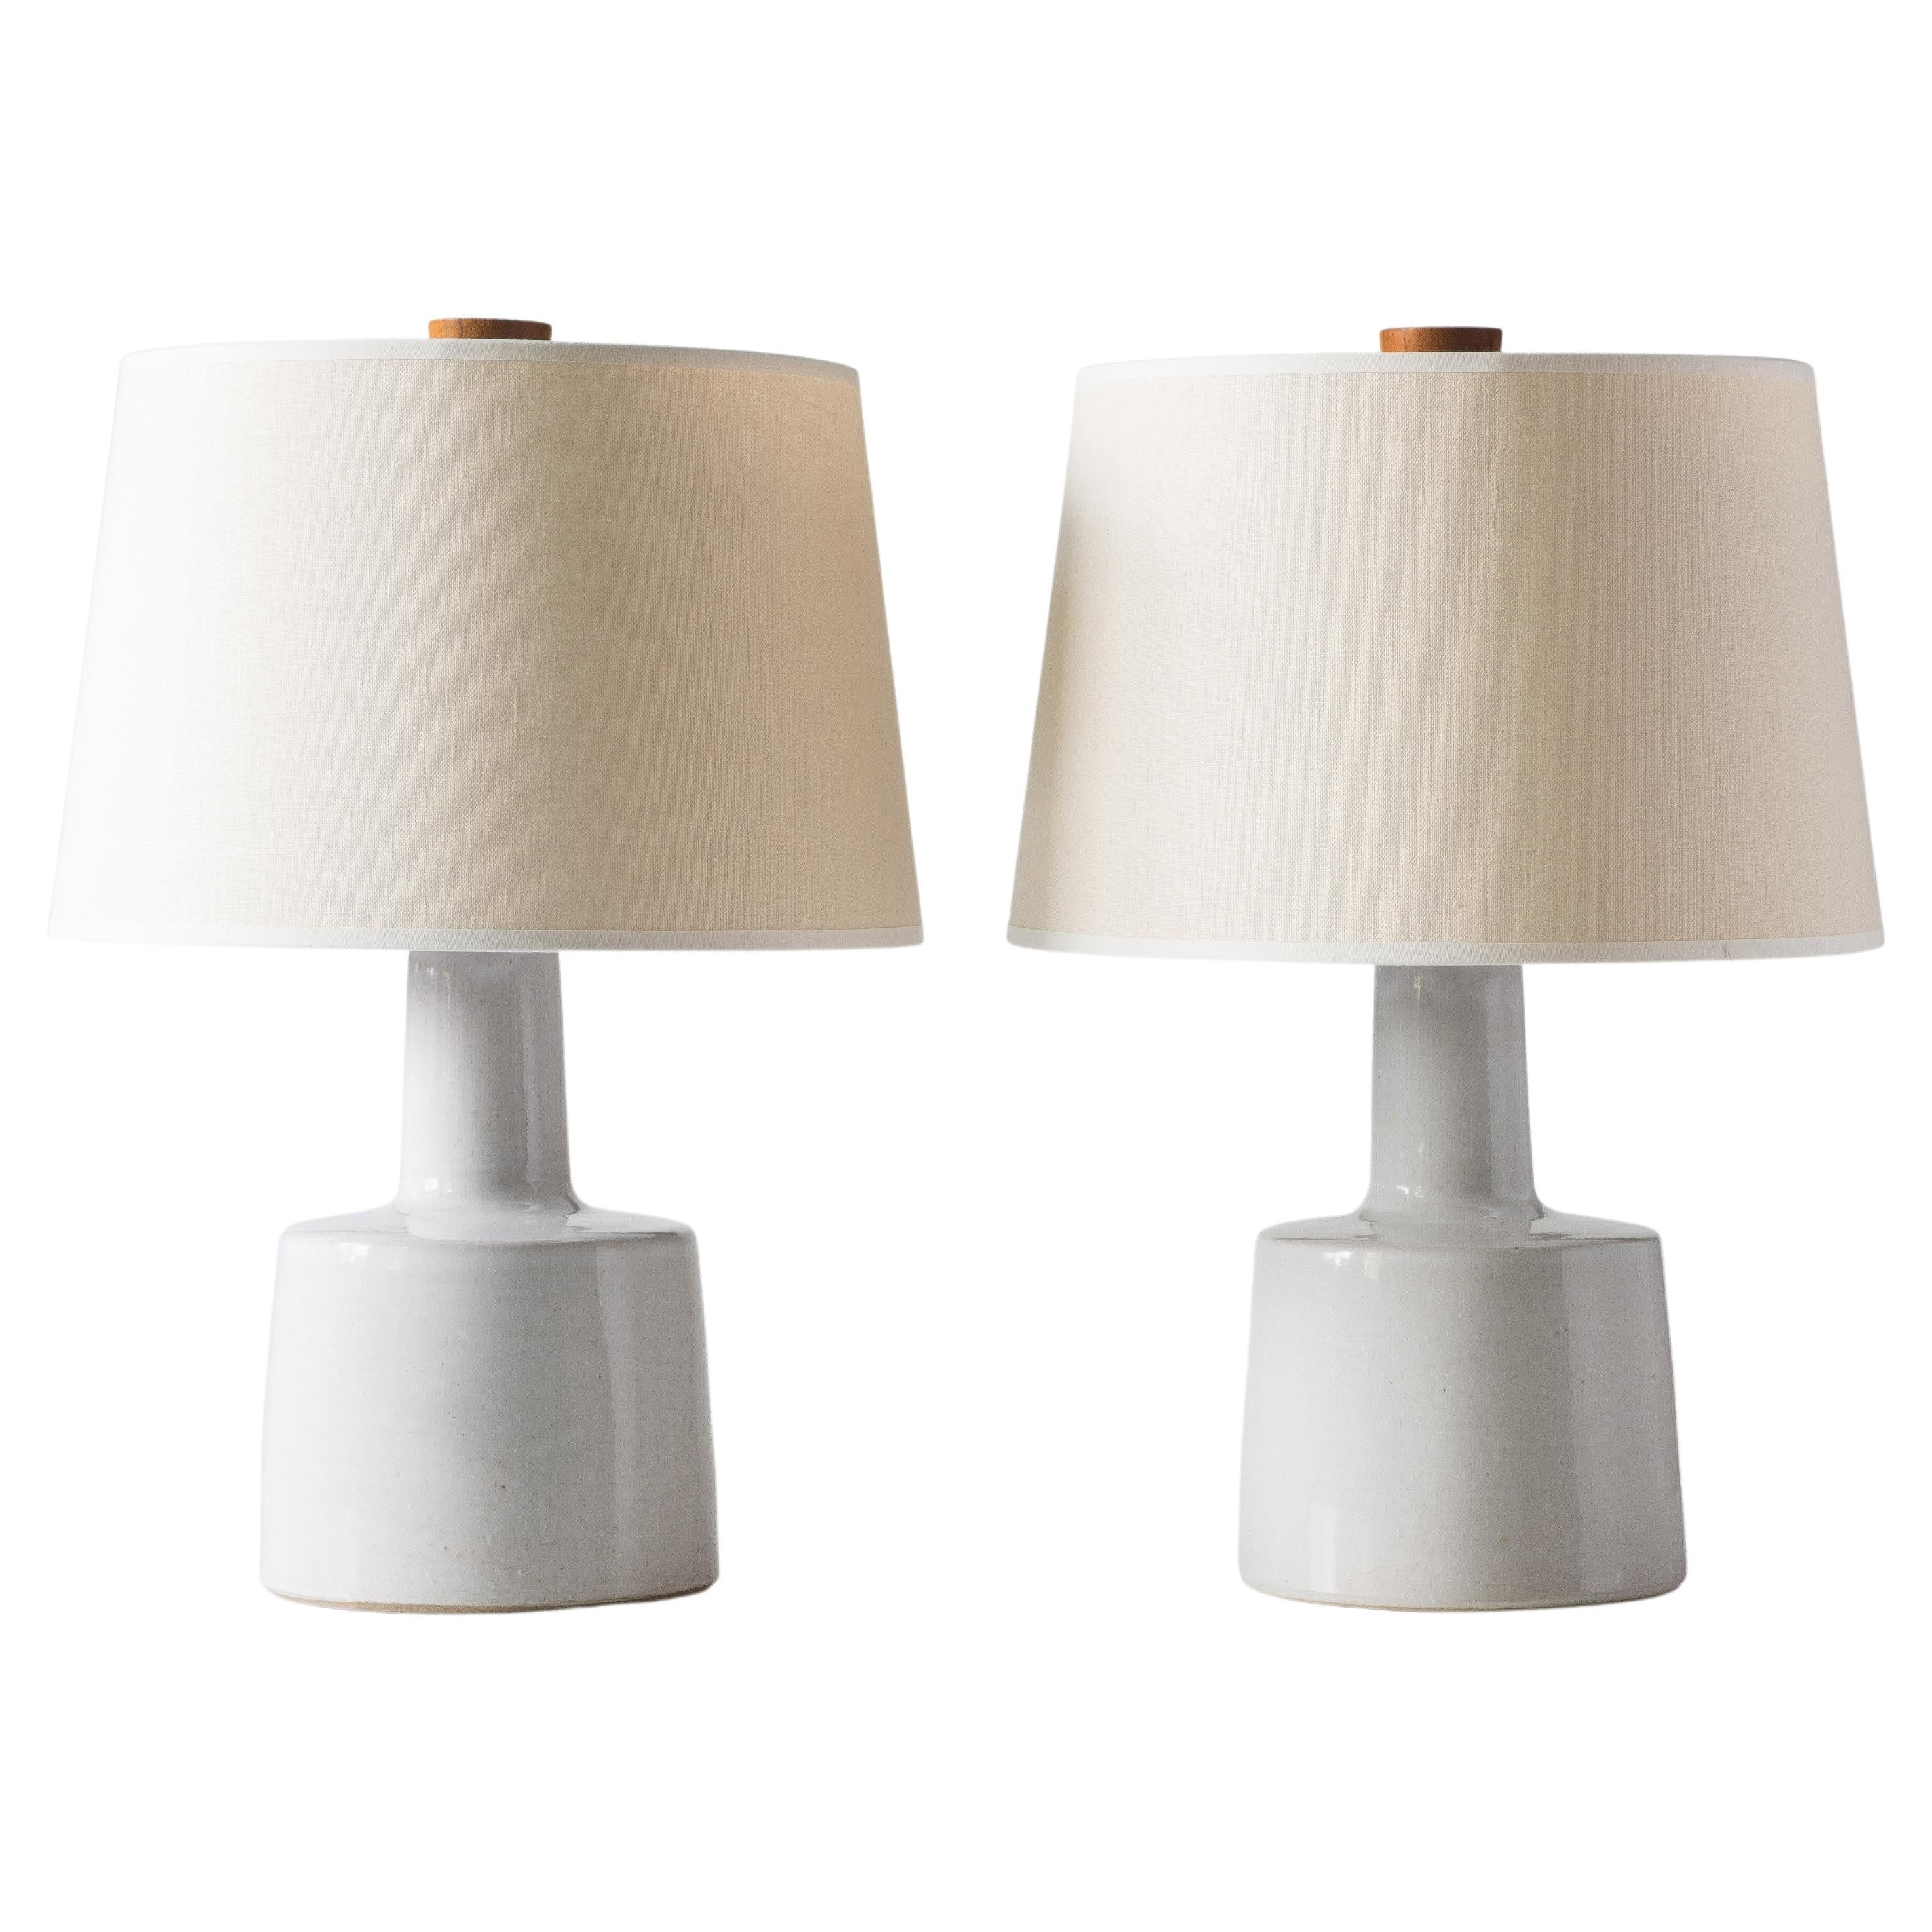 Martz / Marshall Studios Ceramic Table Lamp Pair, White Glossy Glaze